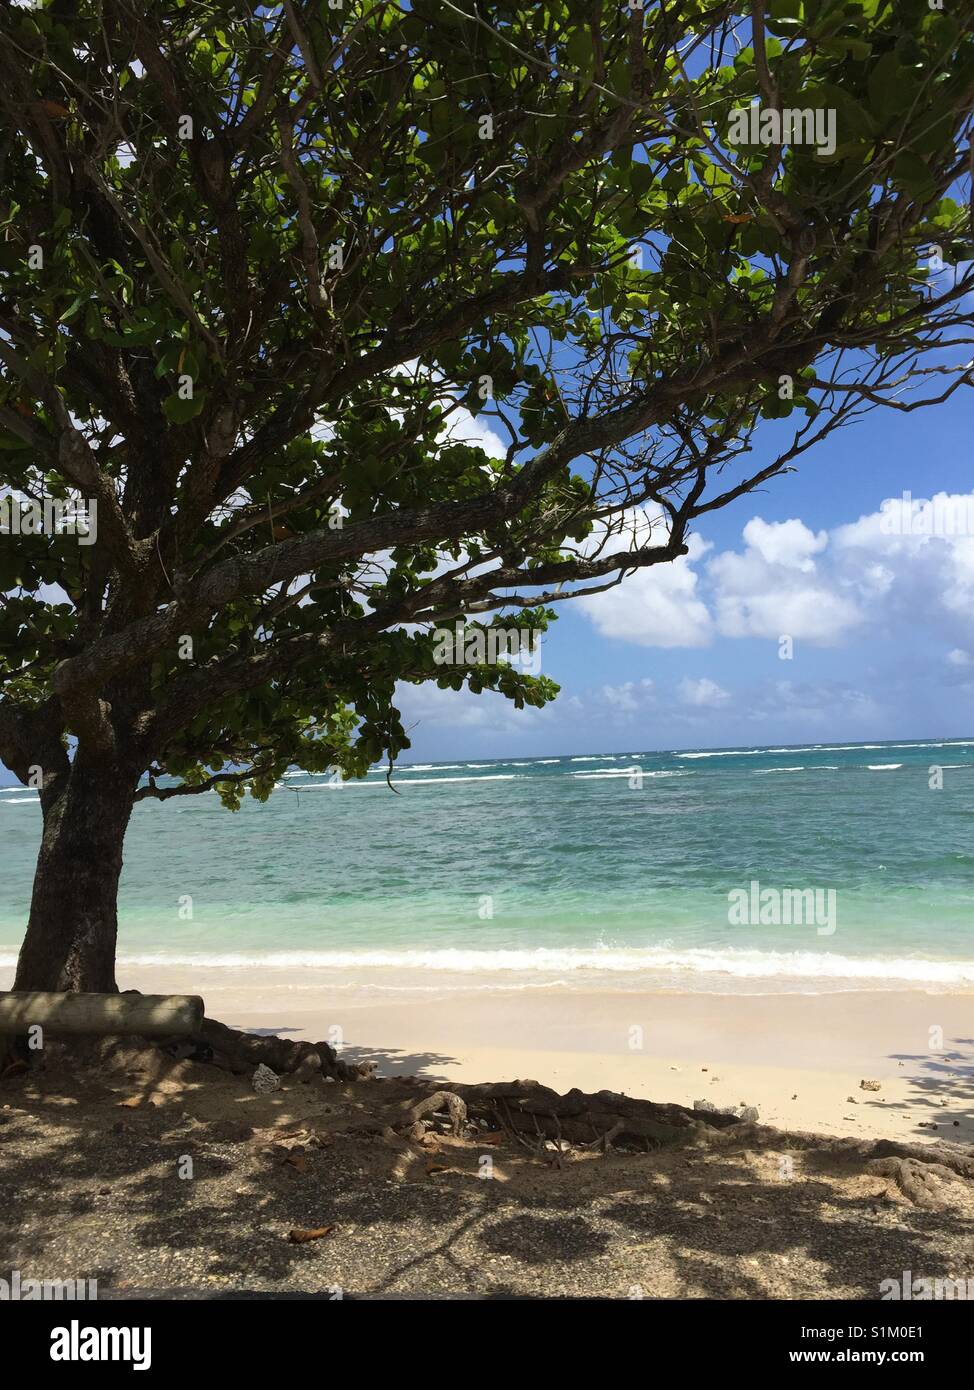 Tree by the beach Stock Photo